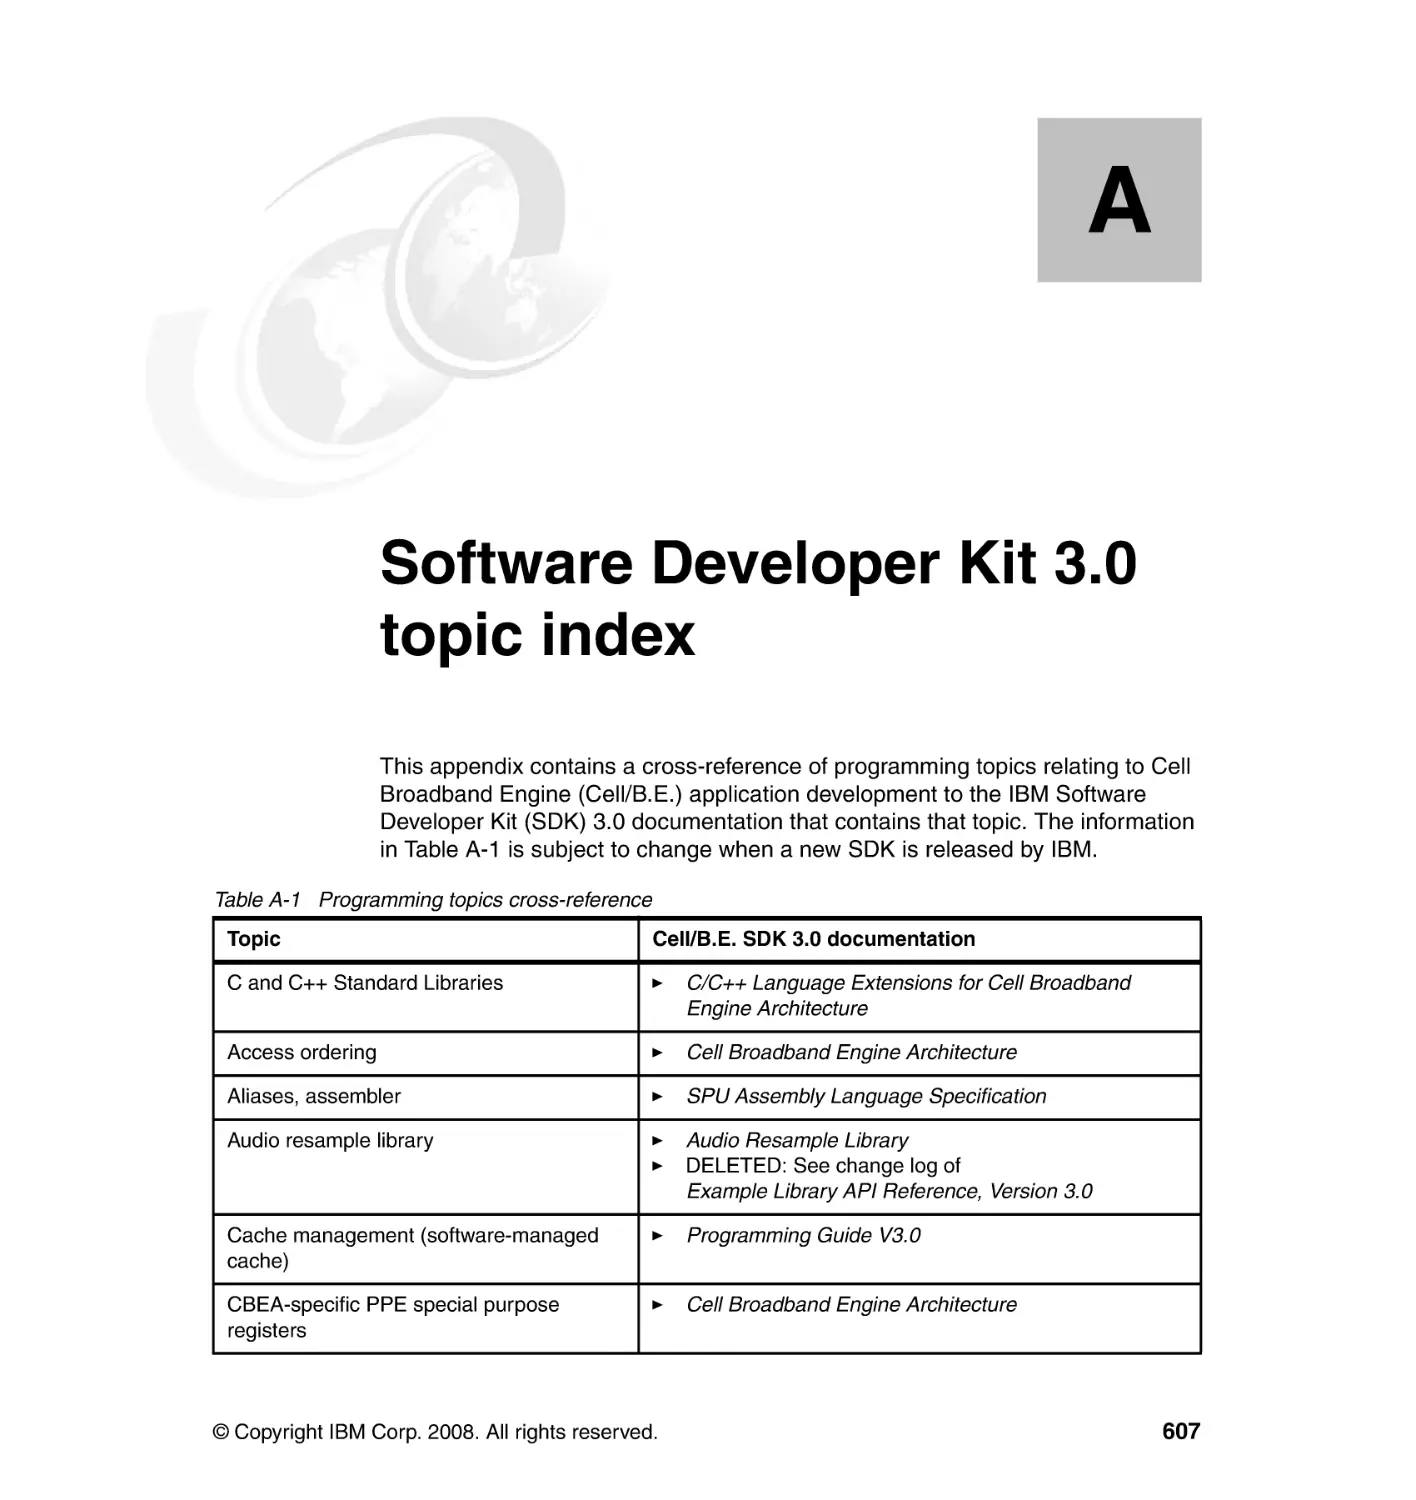 Appendix A. Software Developer Kit 3.0 topic index